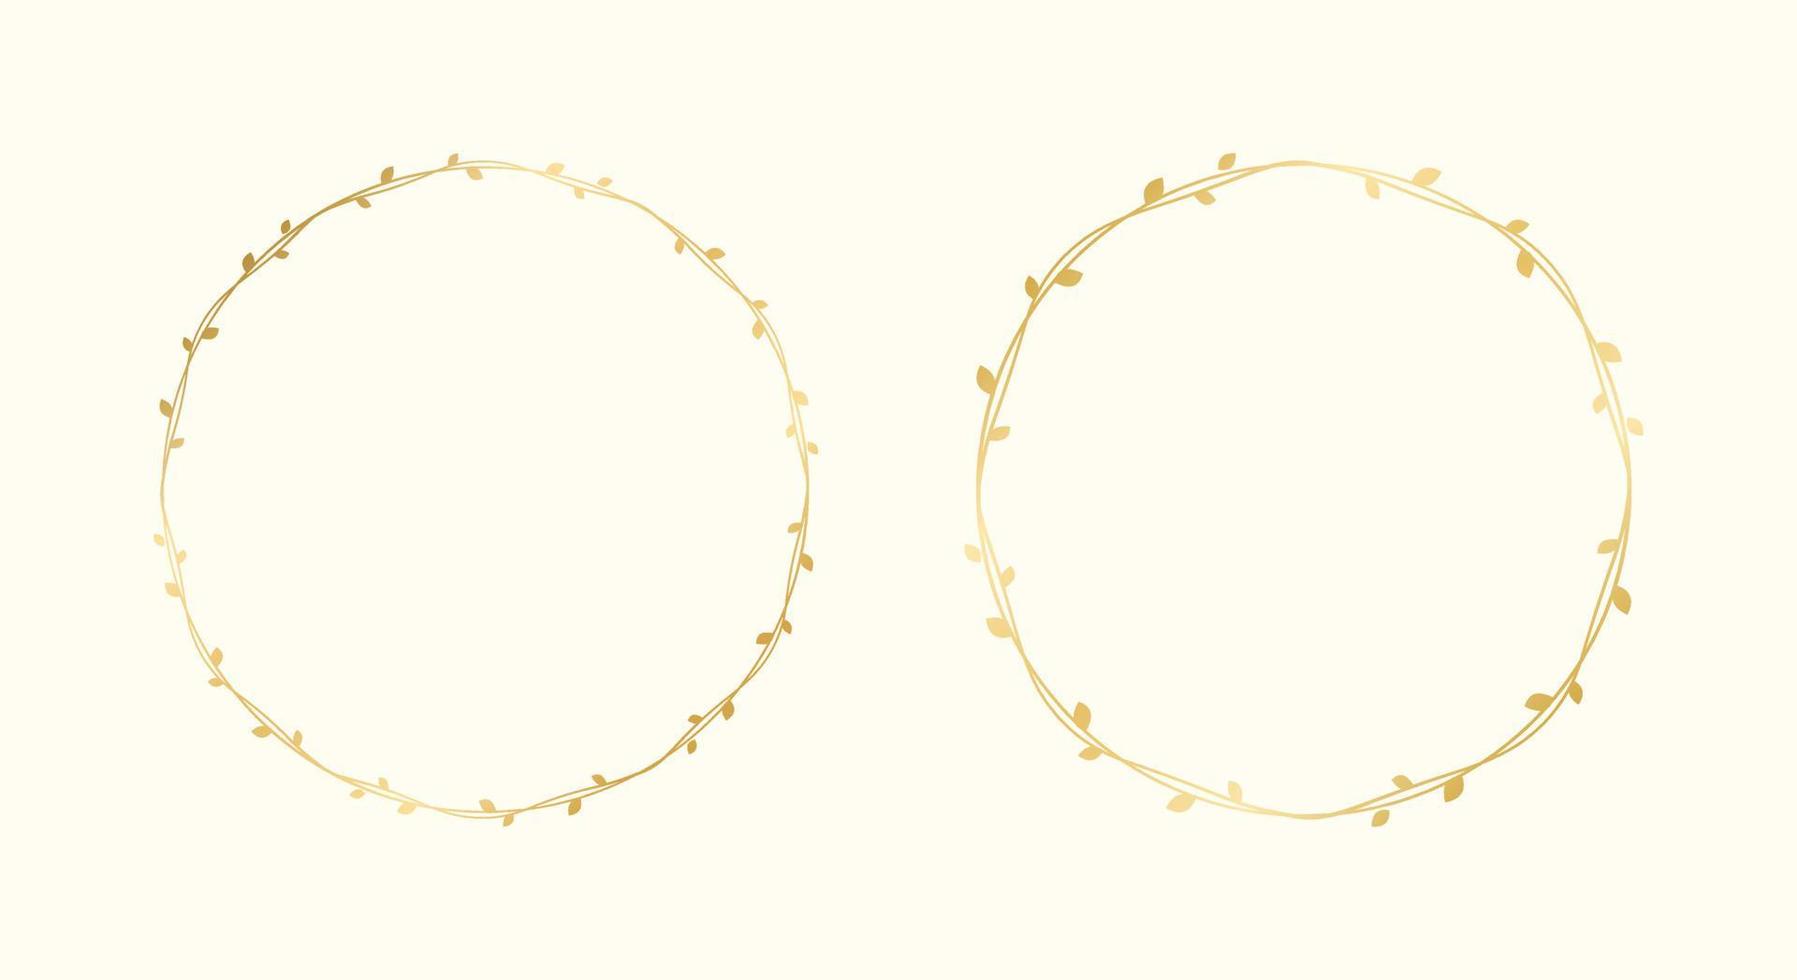 Round gold vine frame wedding elegant wreath set. Circle golden frame with botanical design. Vector isolated illustration.